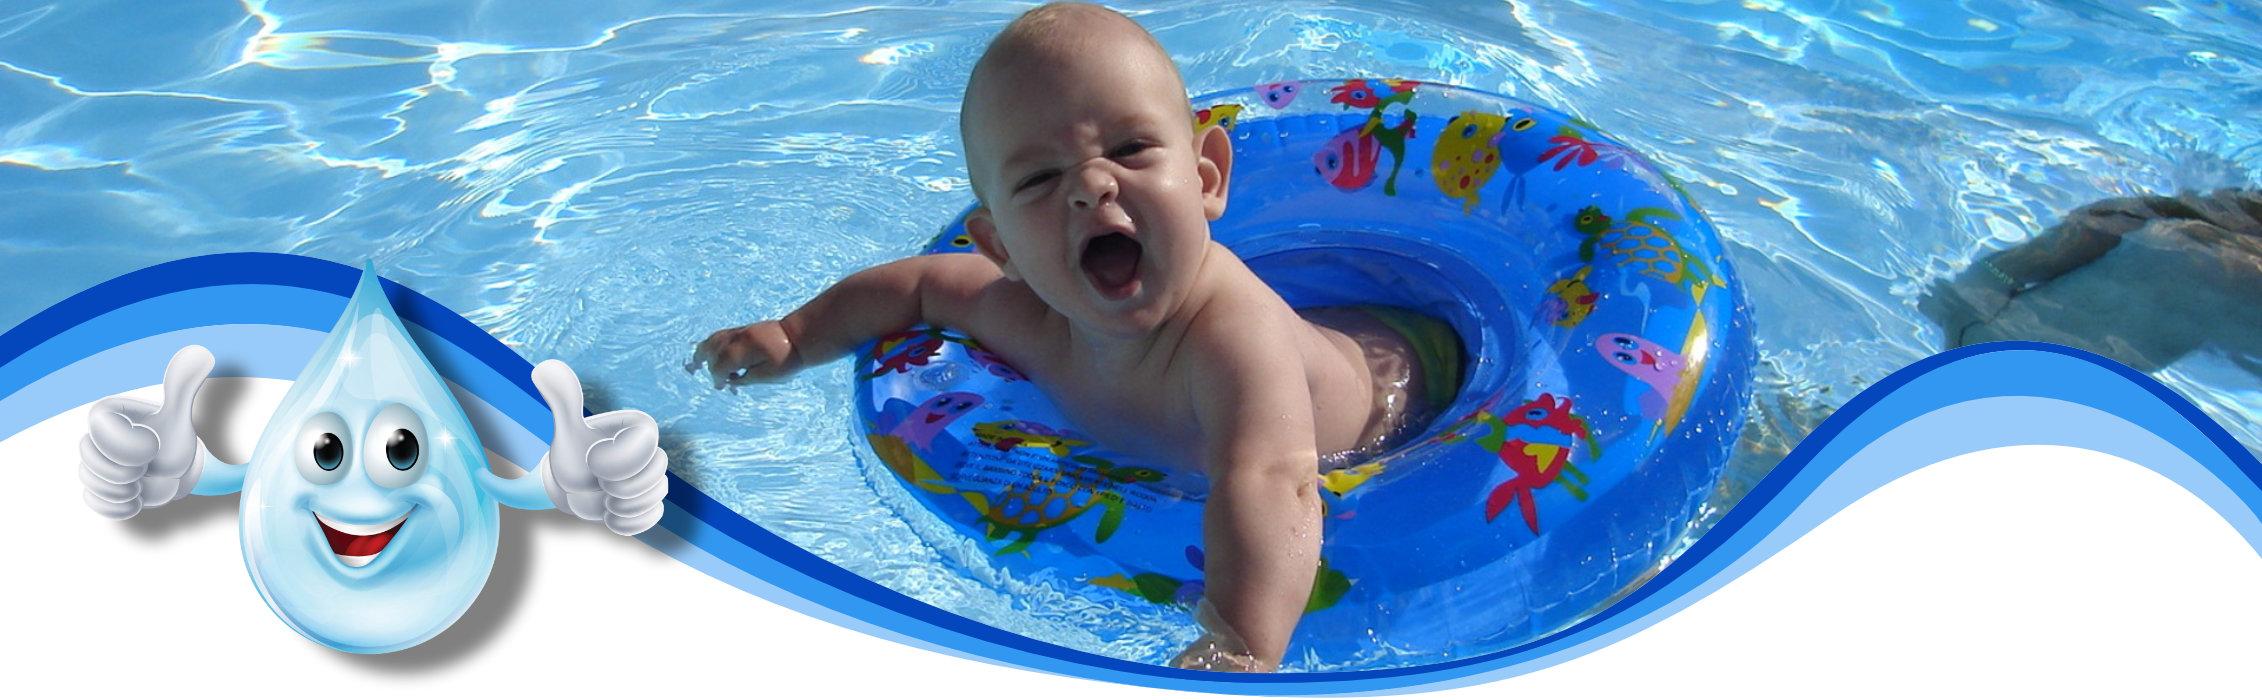 baby-pool-chlorfrei